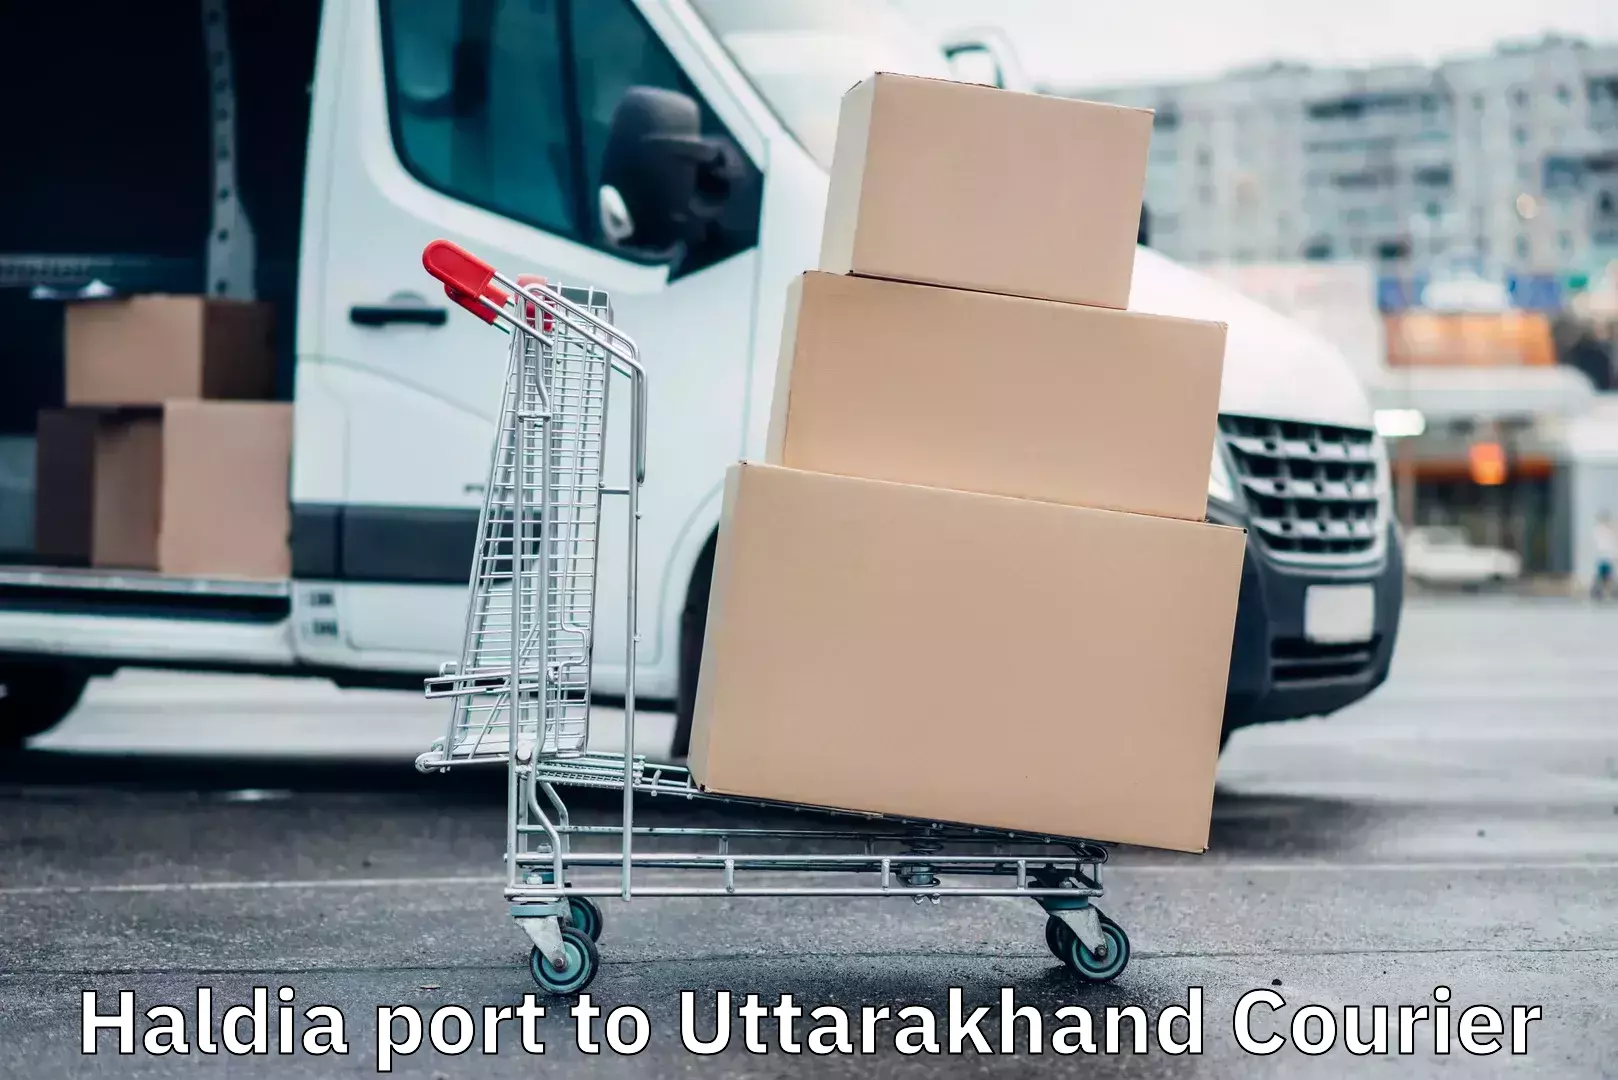 Business delivery service Haldia port to Uttarakhand